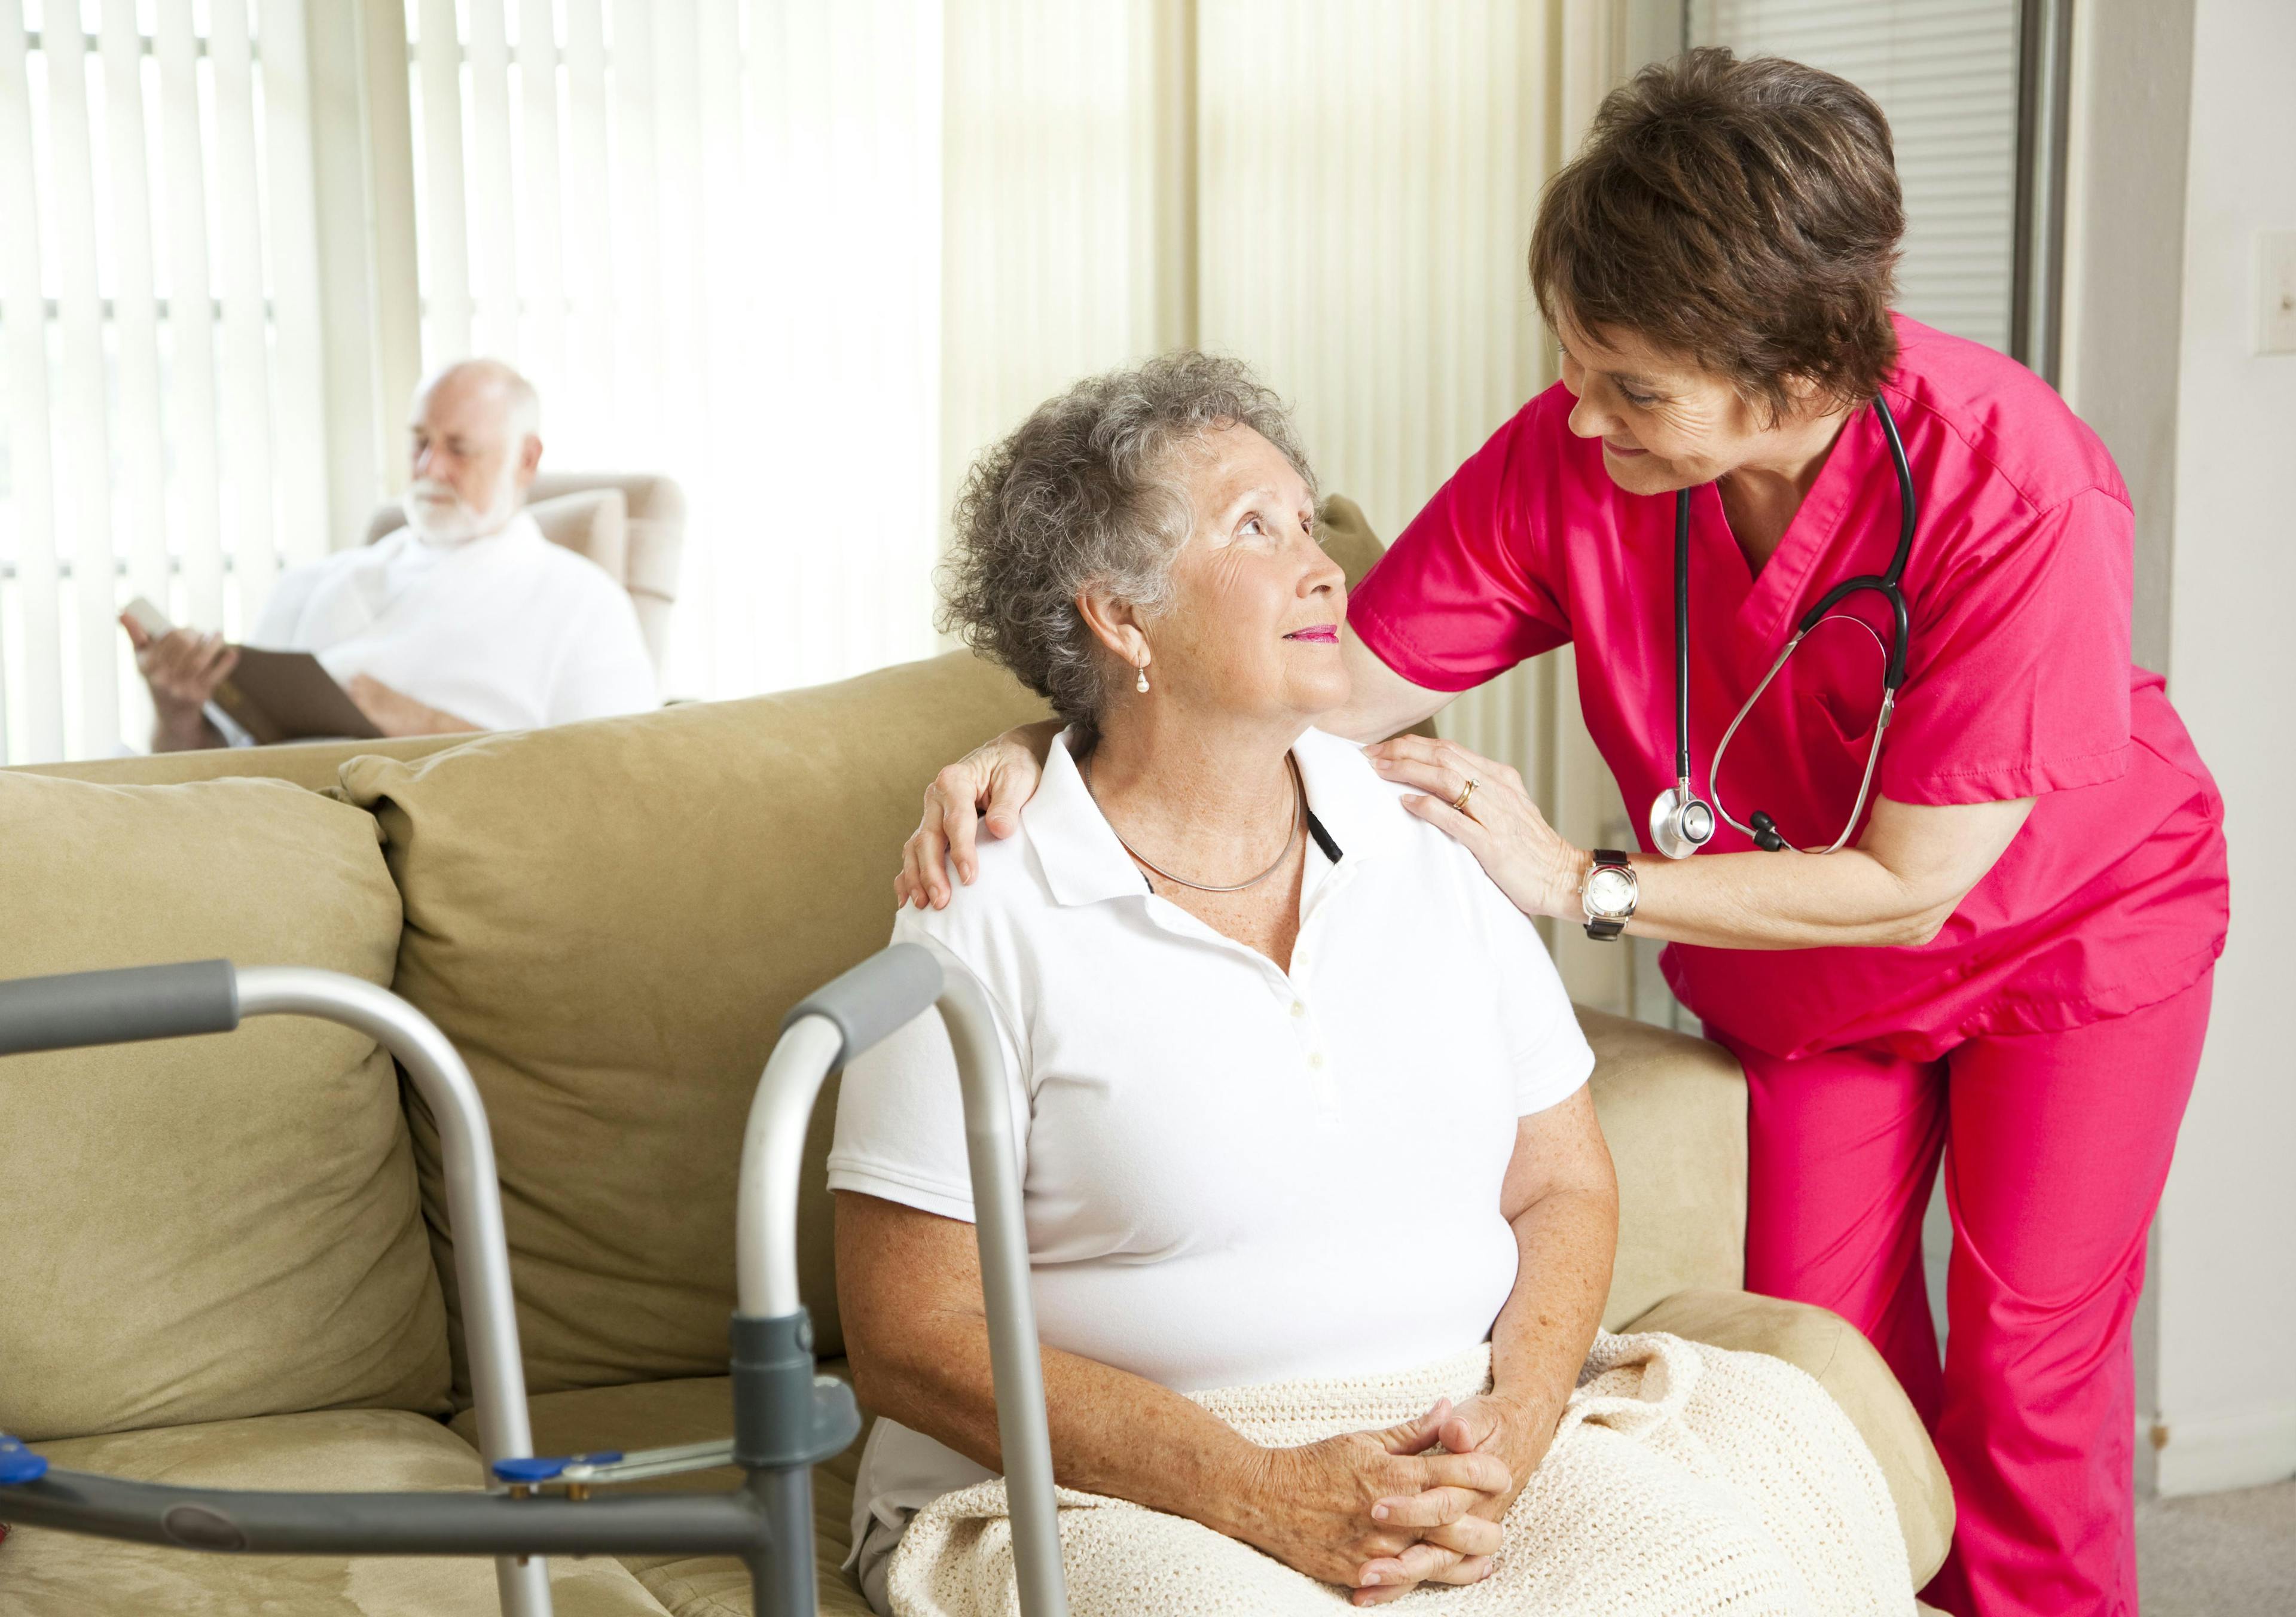 Older patient in a nursing home